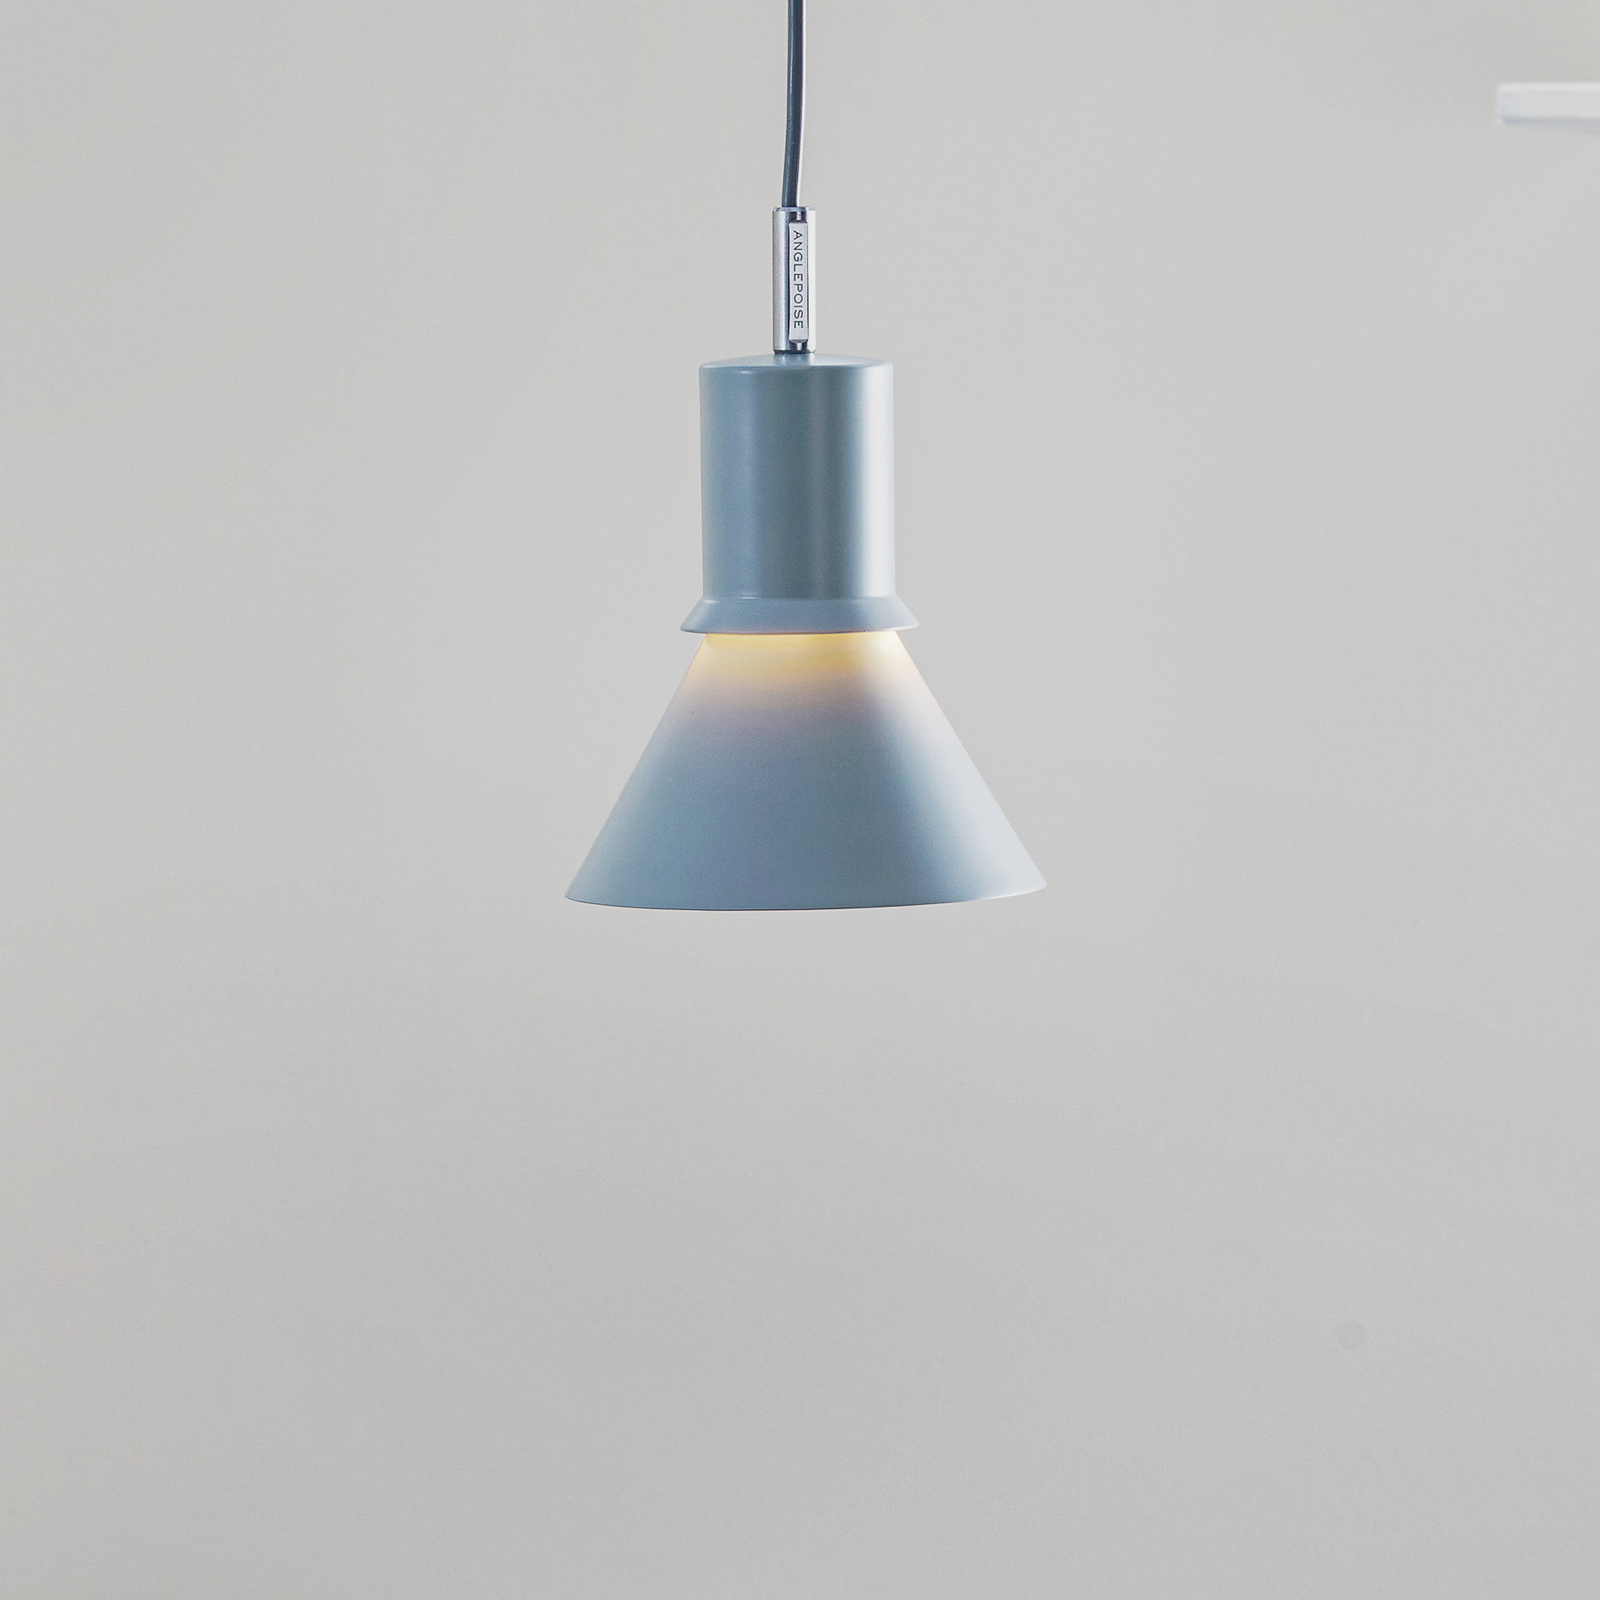 Anglepoise Type 80 hanging light, mist grey